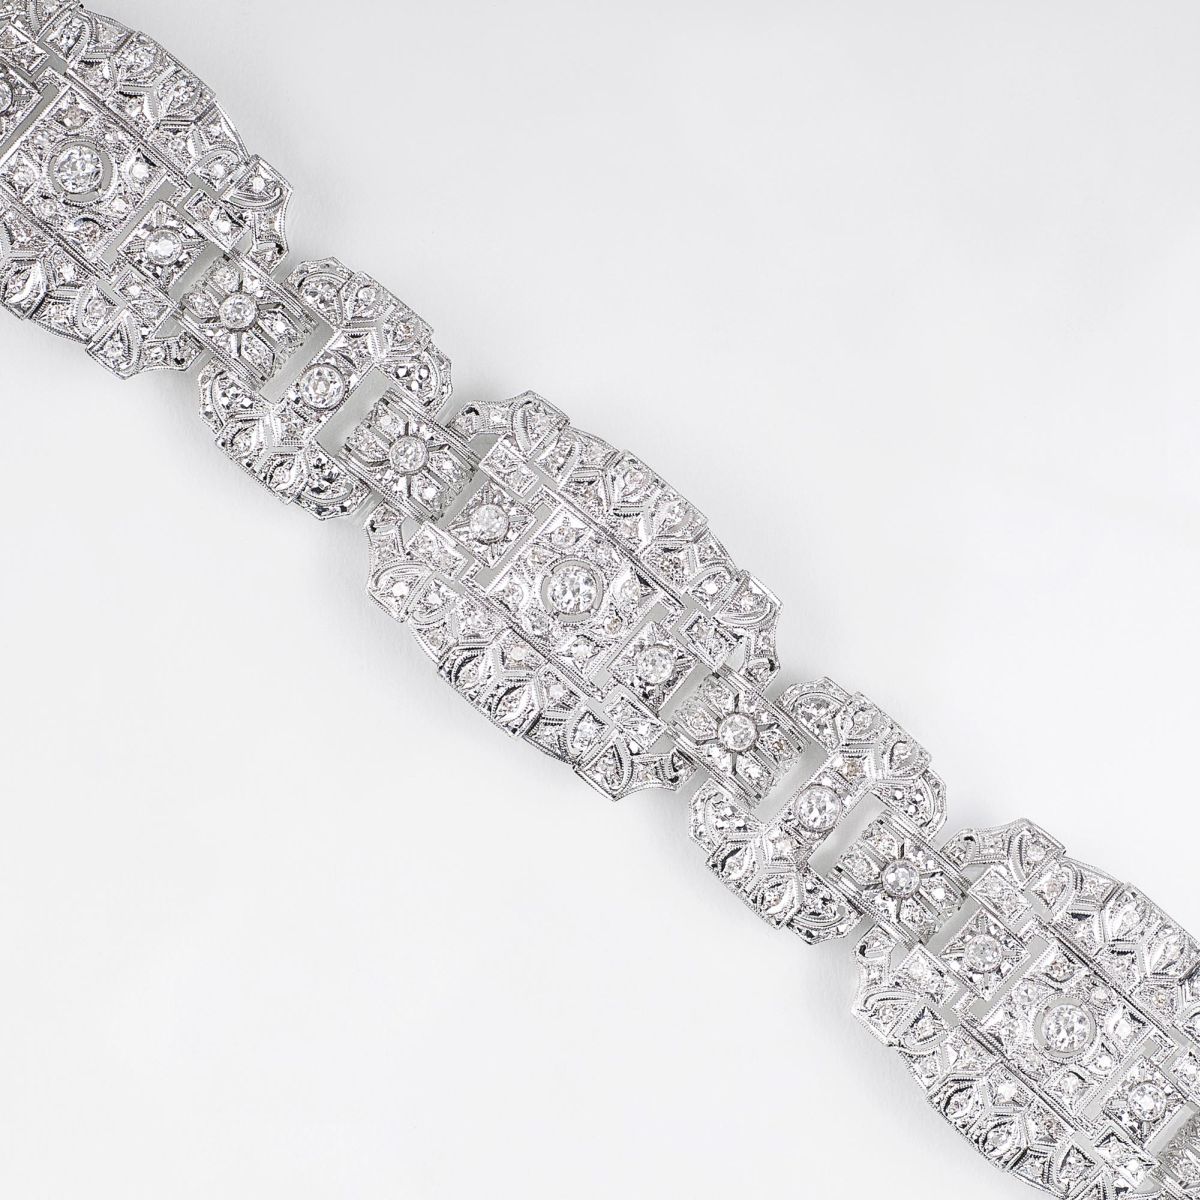 An opulent Diamond Bracelet in the style of Art-déco